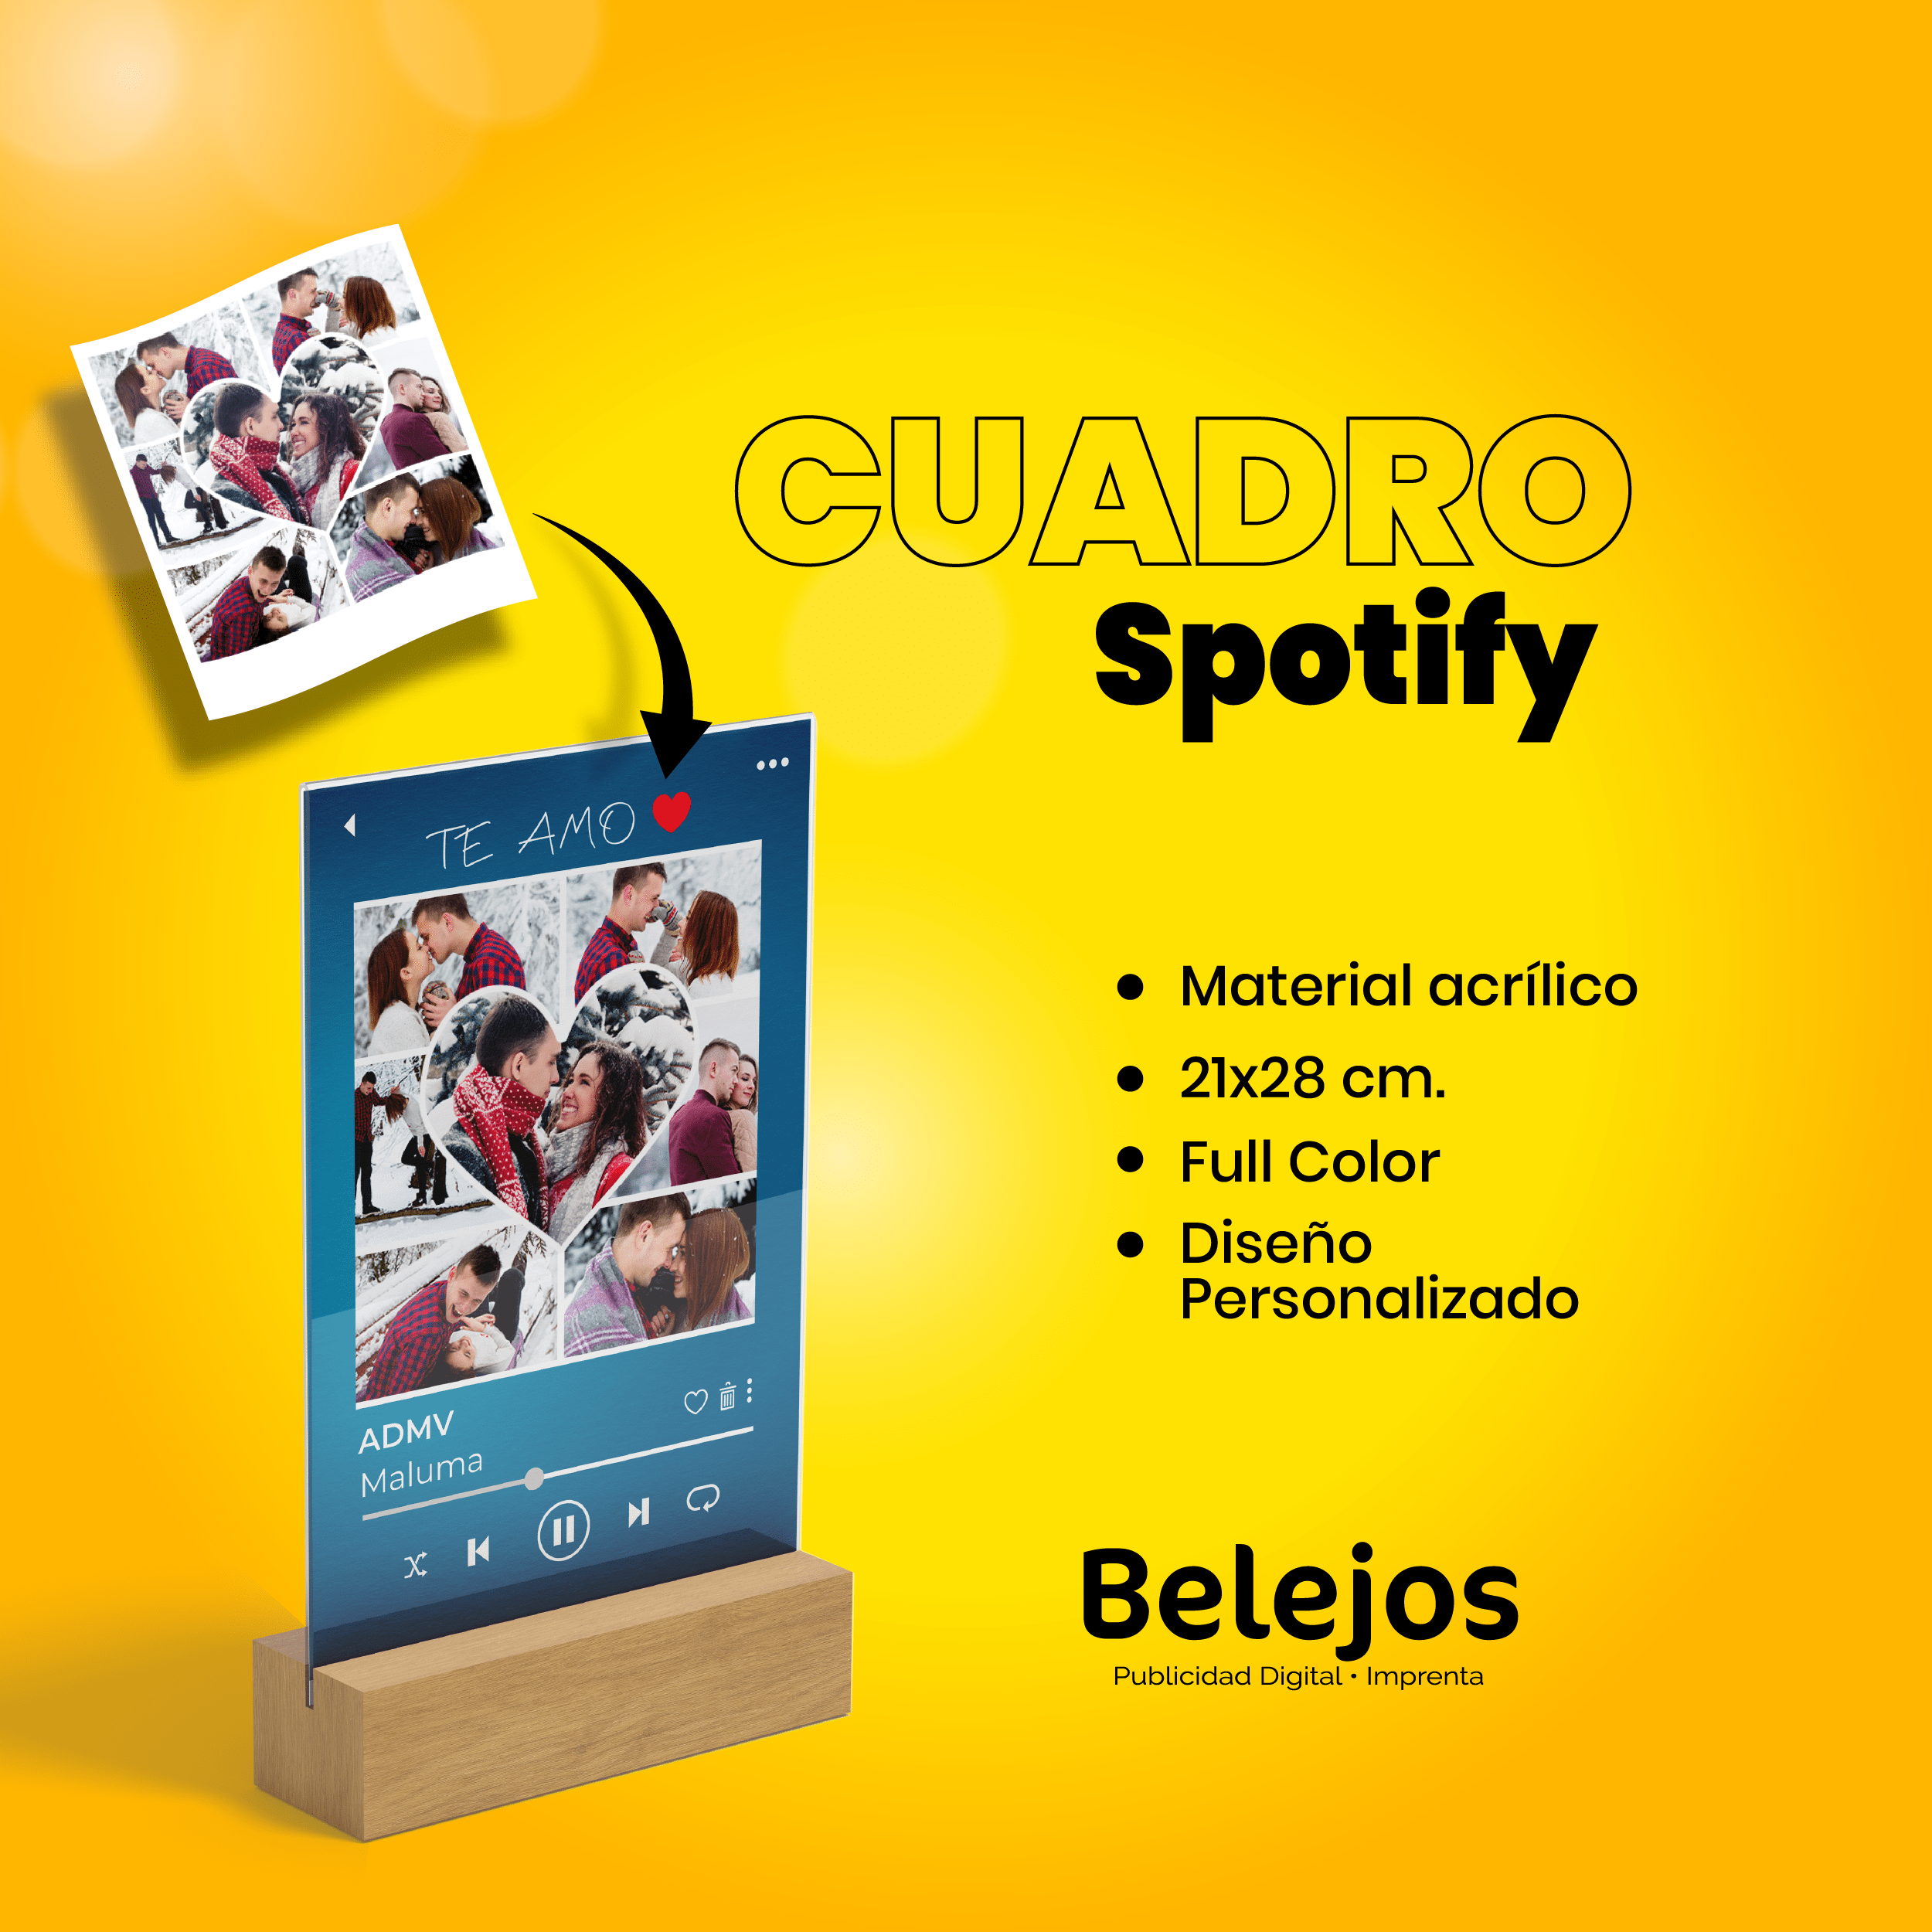 Cuadro Spotify - BELEJOS